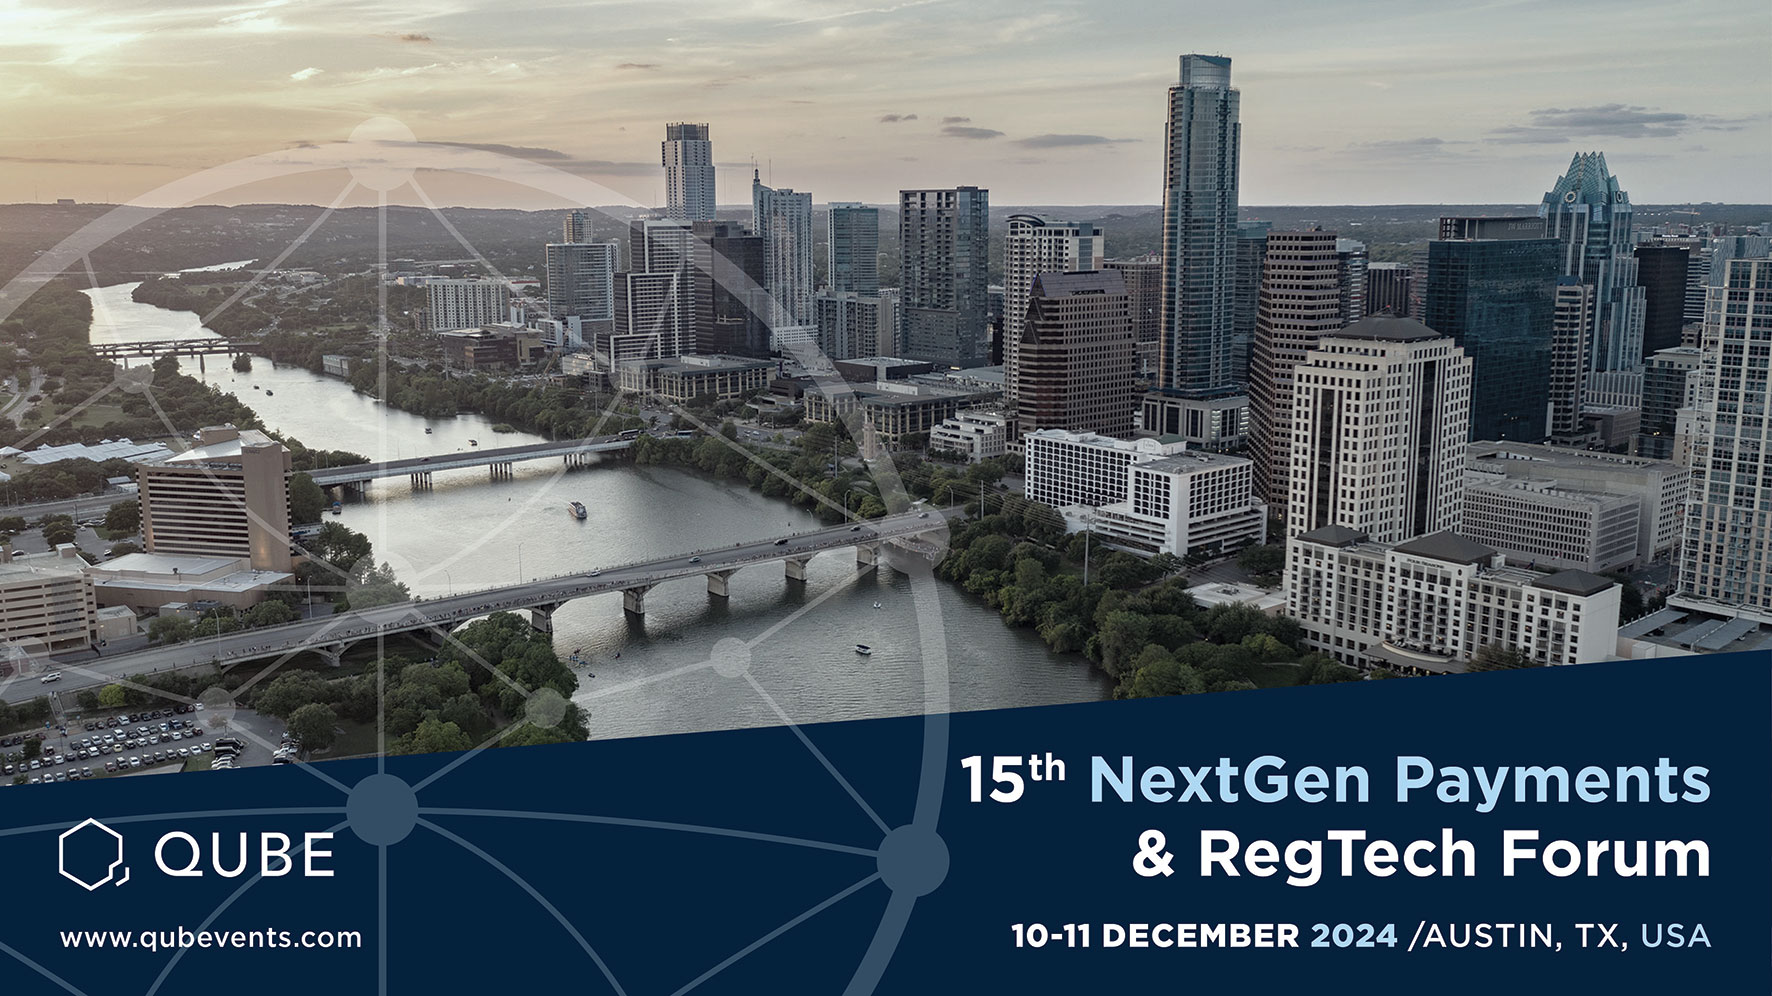 The 15th NextGen Payments & RegTech Forum  organized by melina thomas